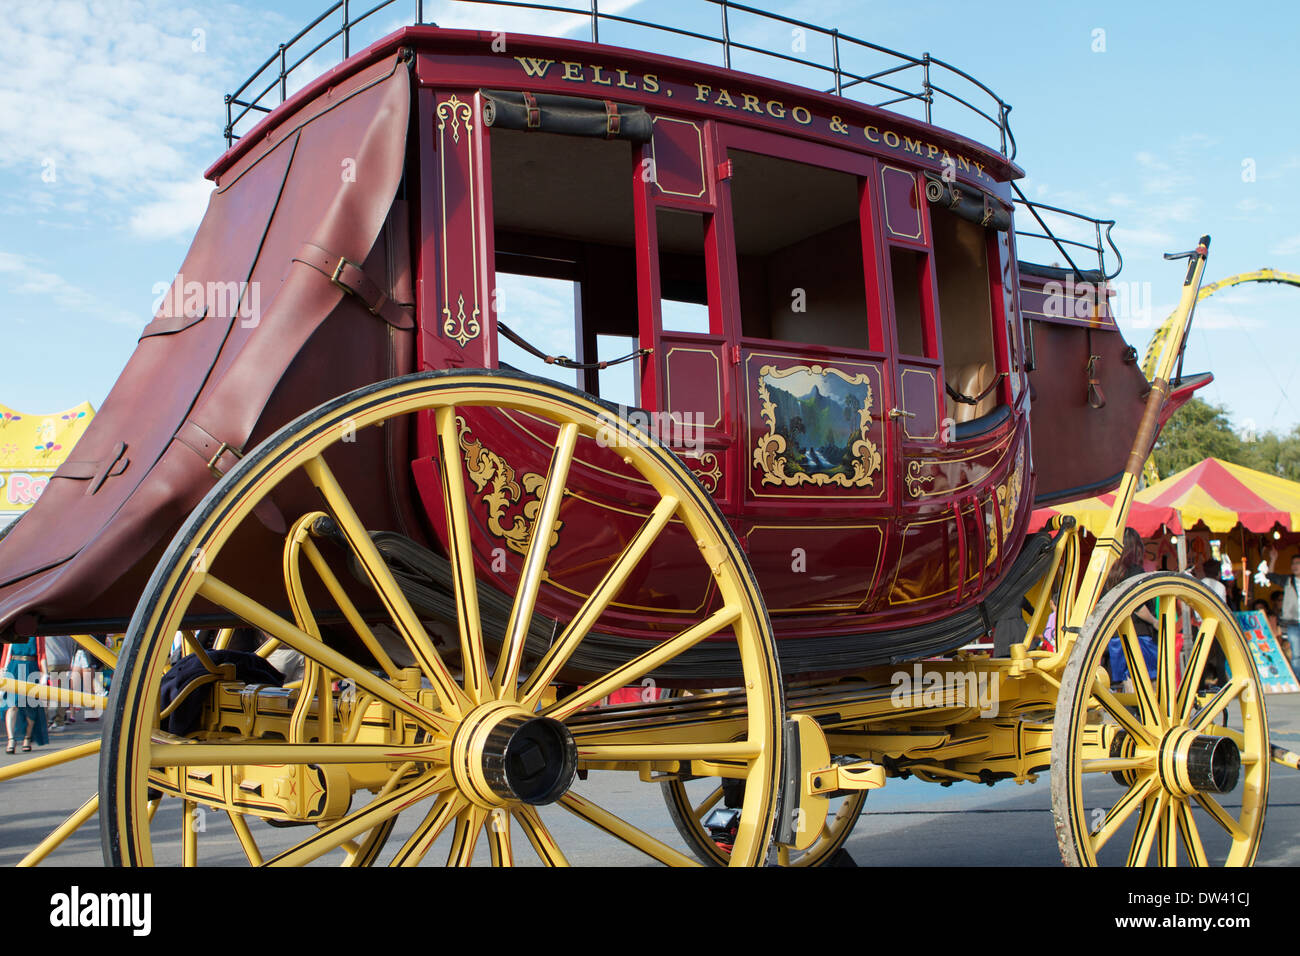 Wells Fargo bank company vintage wooden Stagecoach Stock Photo - Alamy